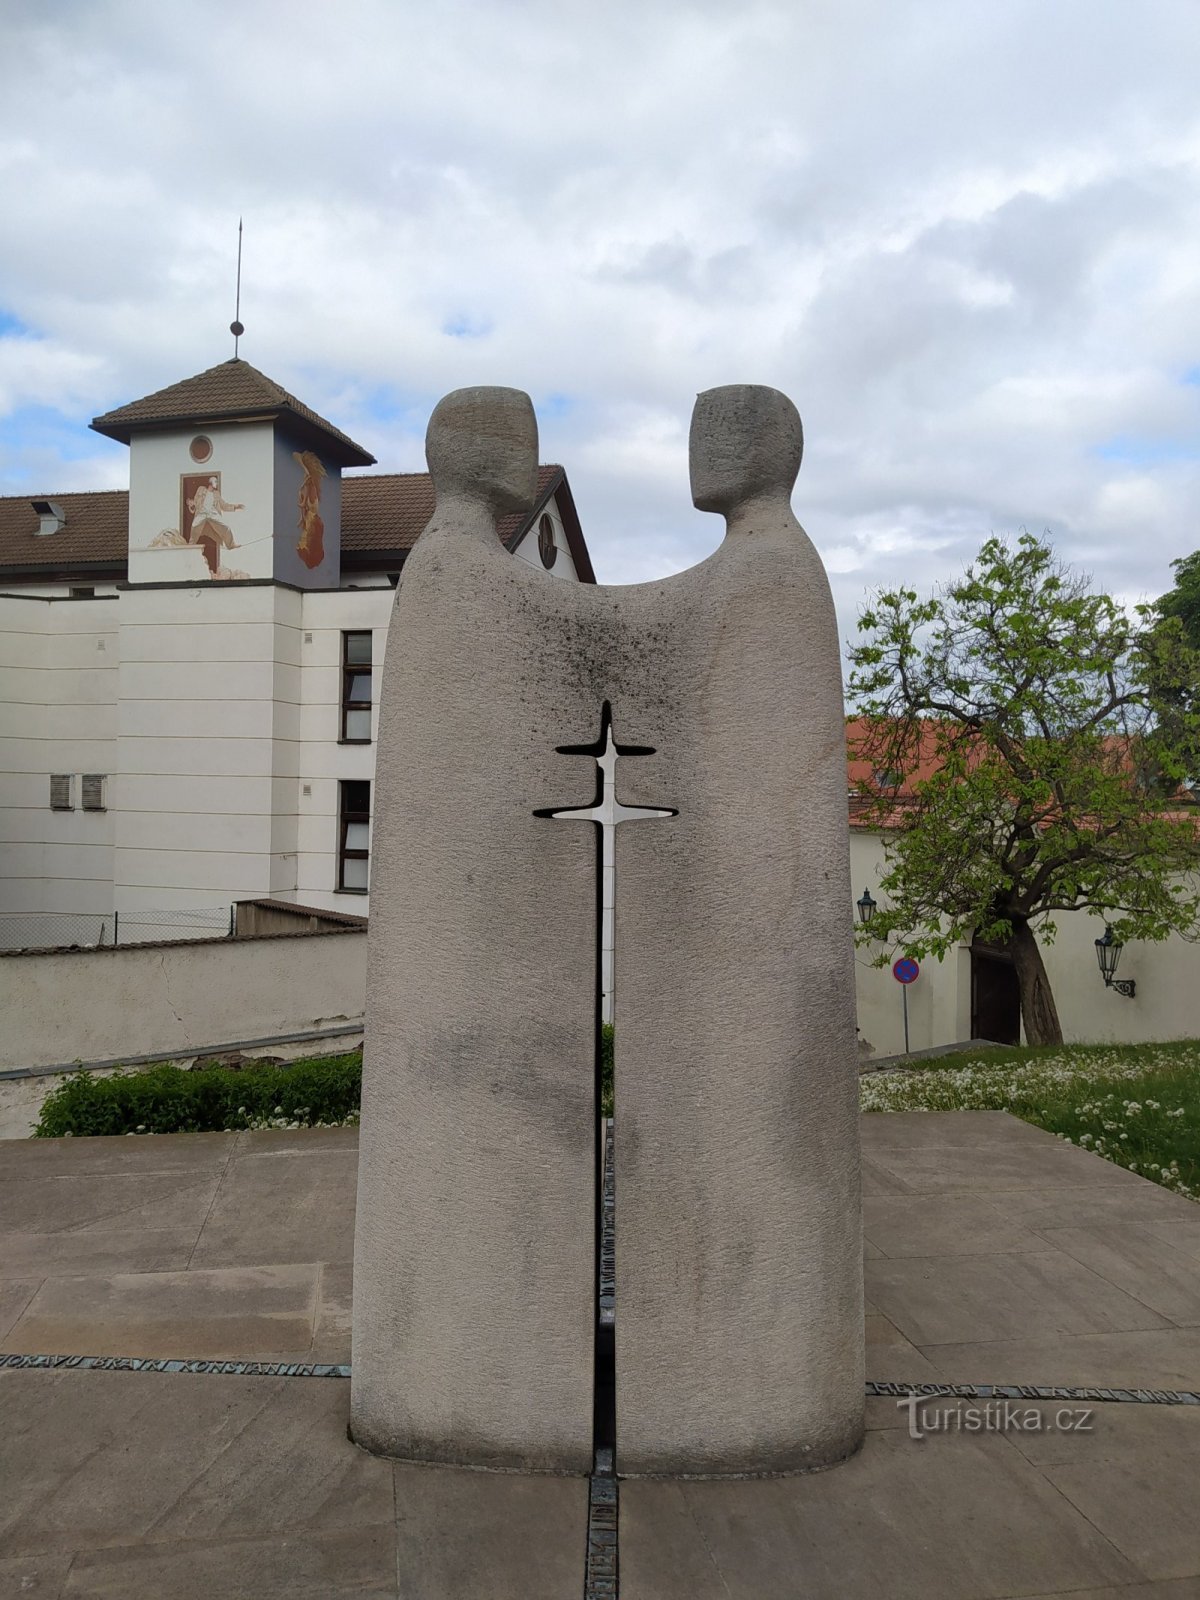 Brno, Petrov, Sousoší st. Cyrillus en Methodius